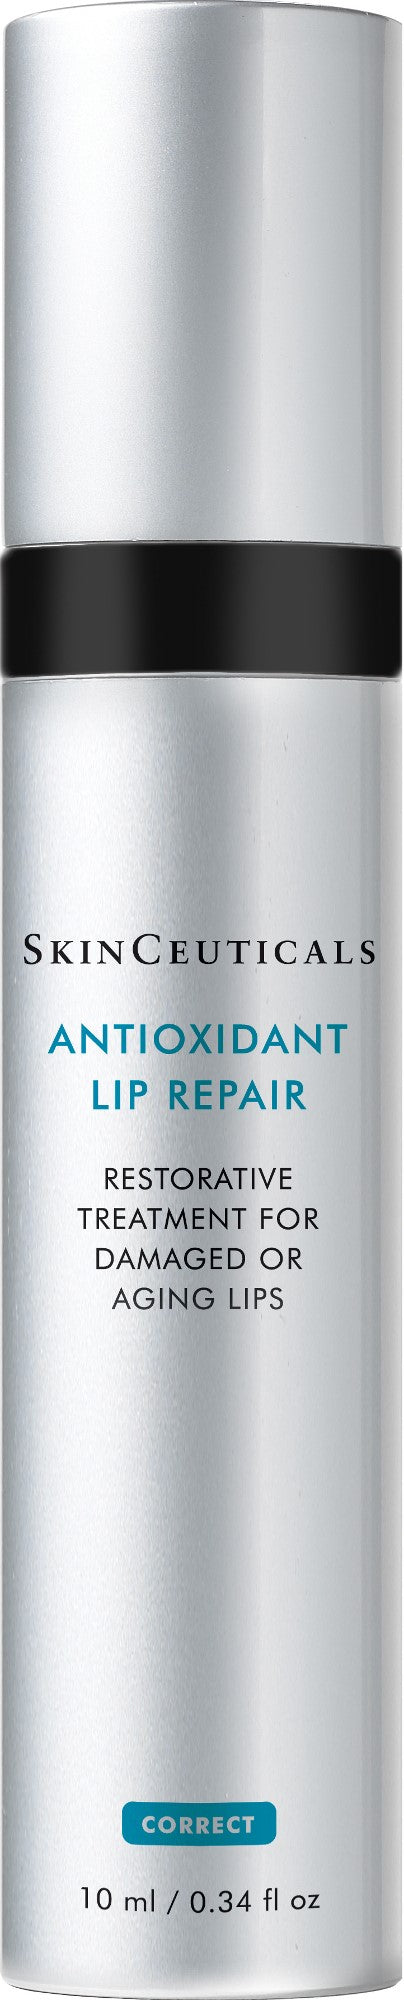 Antioxident Lip Repair 10ml